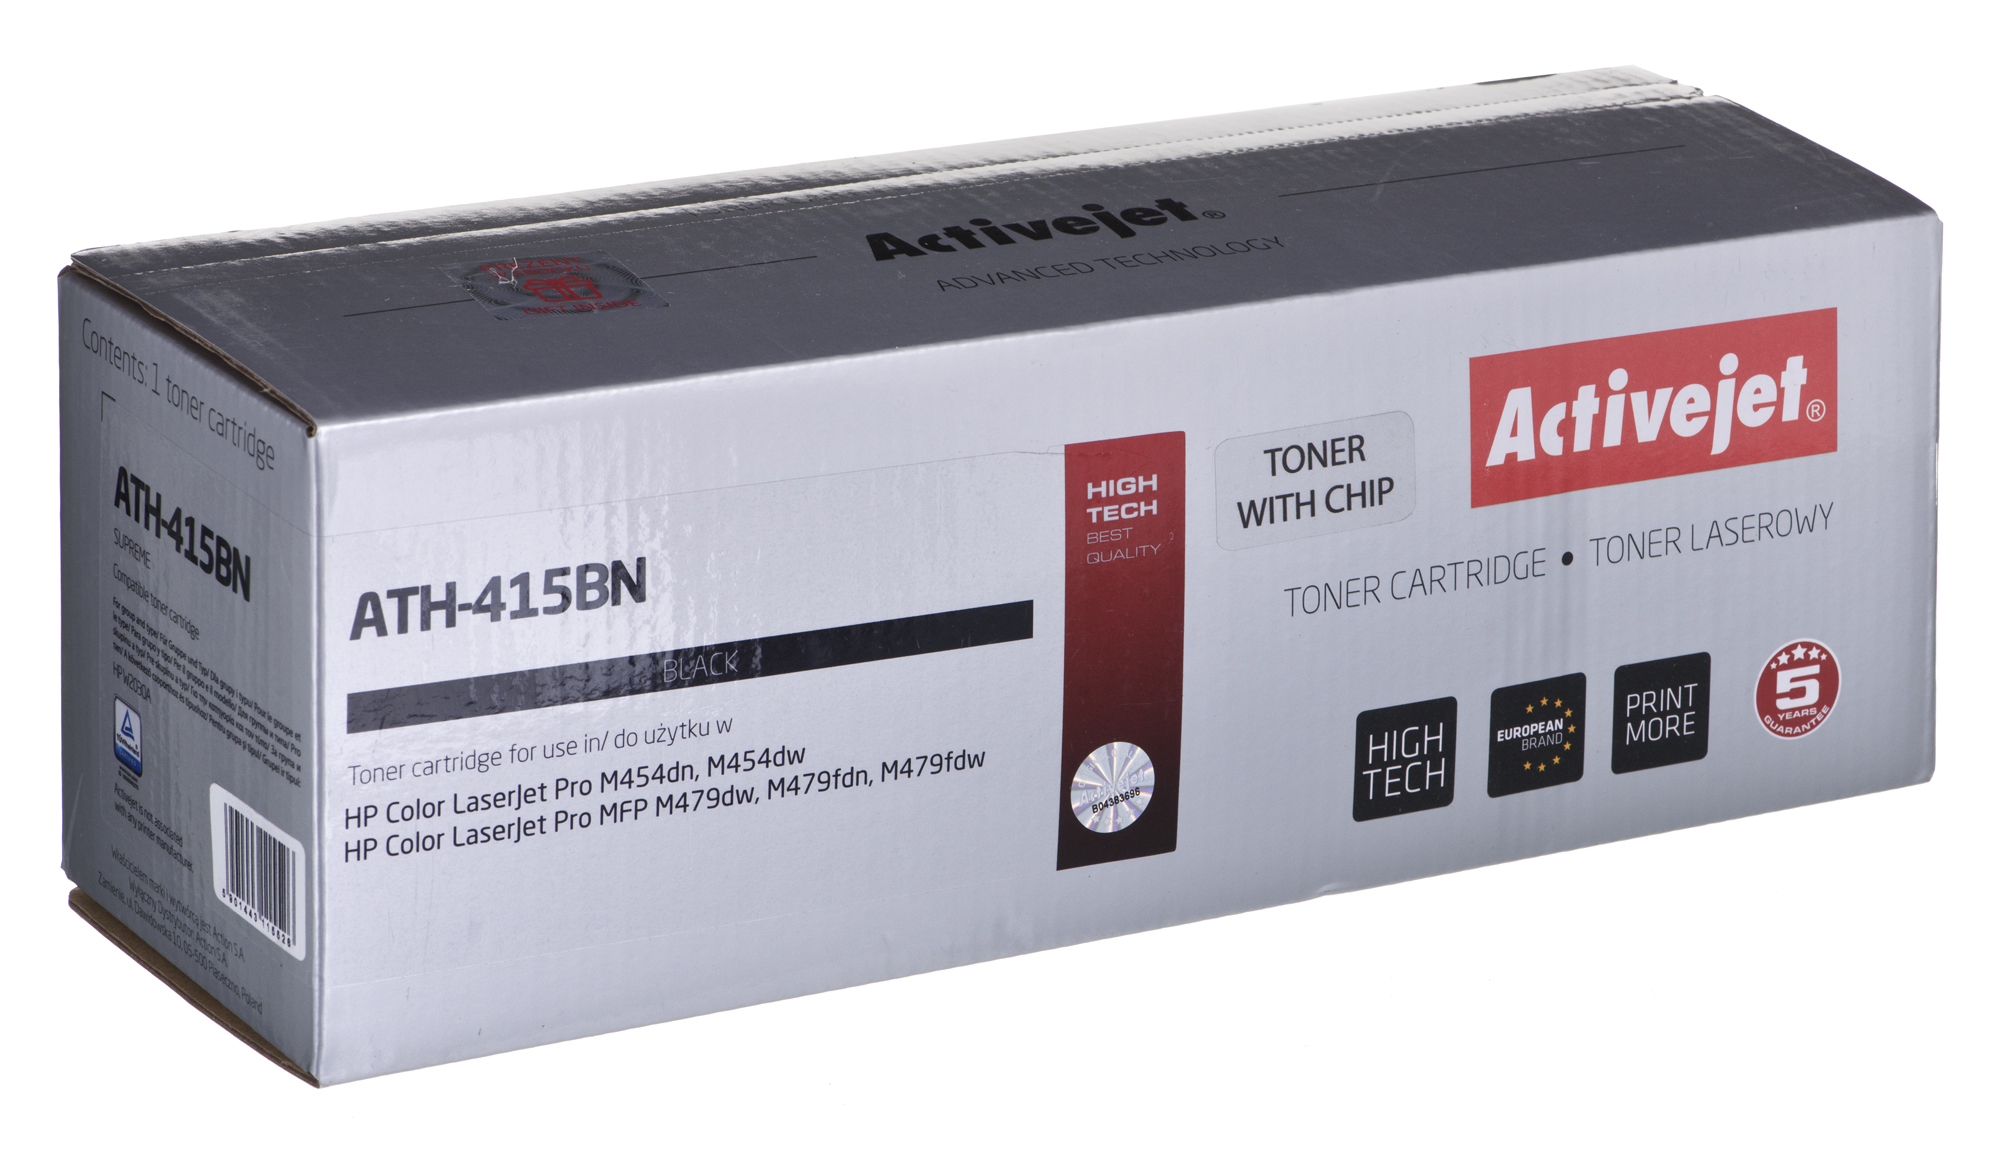 Toner Activejet ATH-415BN do drukarki HP; zamiennik HP 415A W2030A; Supreme; 2400 stron; Czarny, z chipem